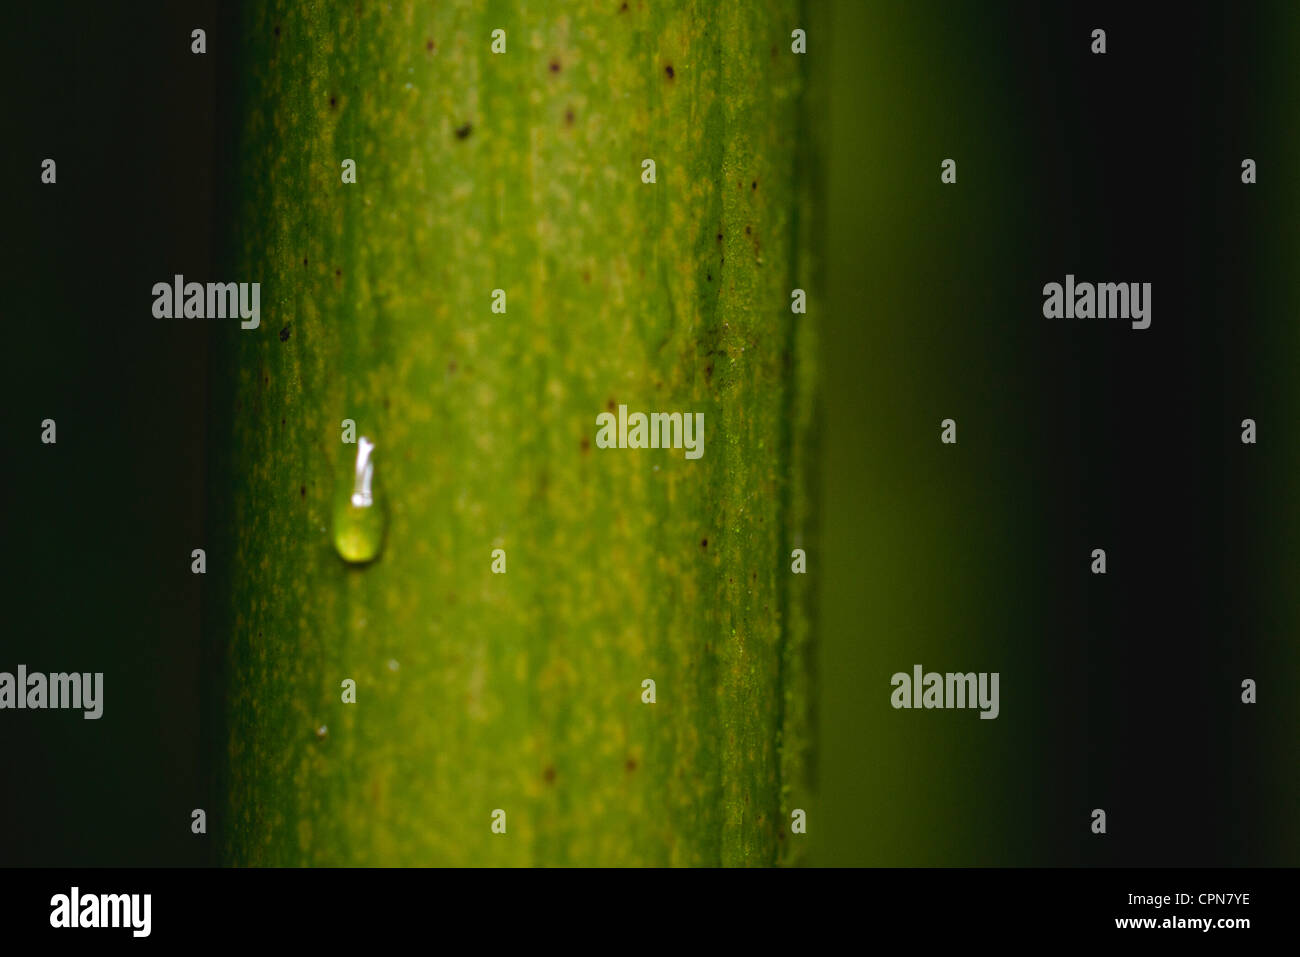 Dew drop on bamboo, close-up Stock Photo